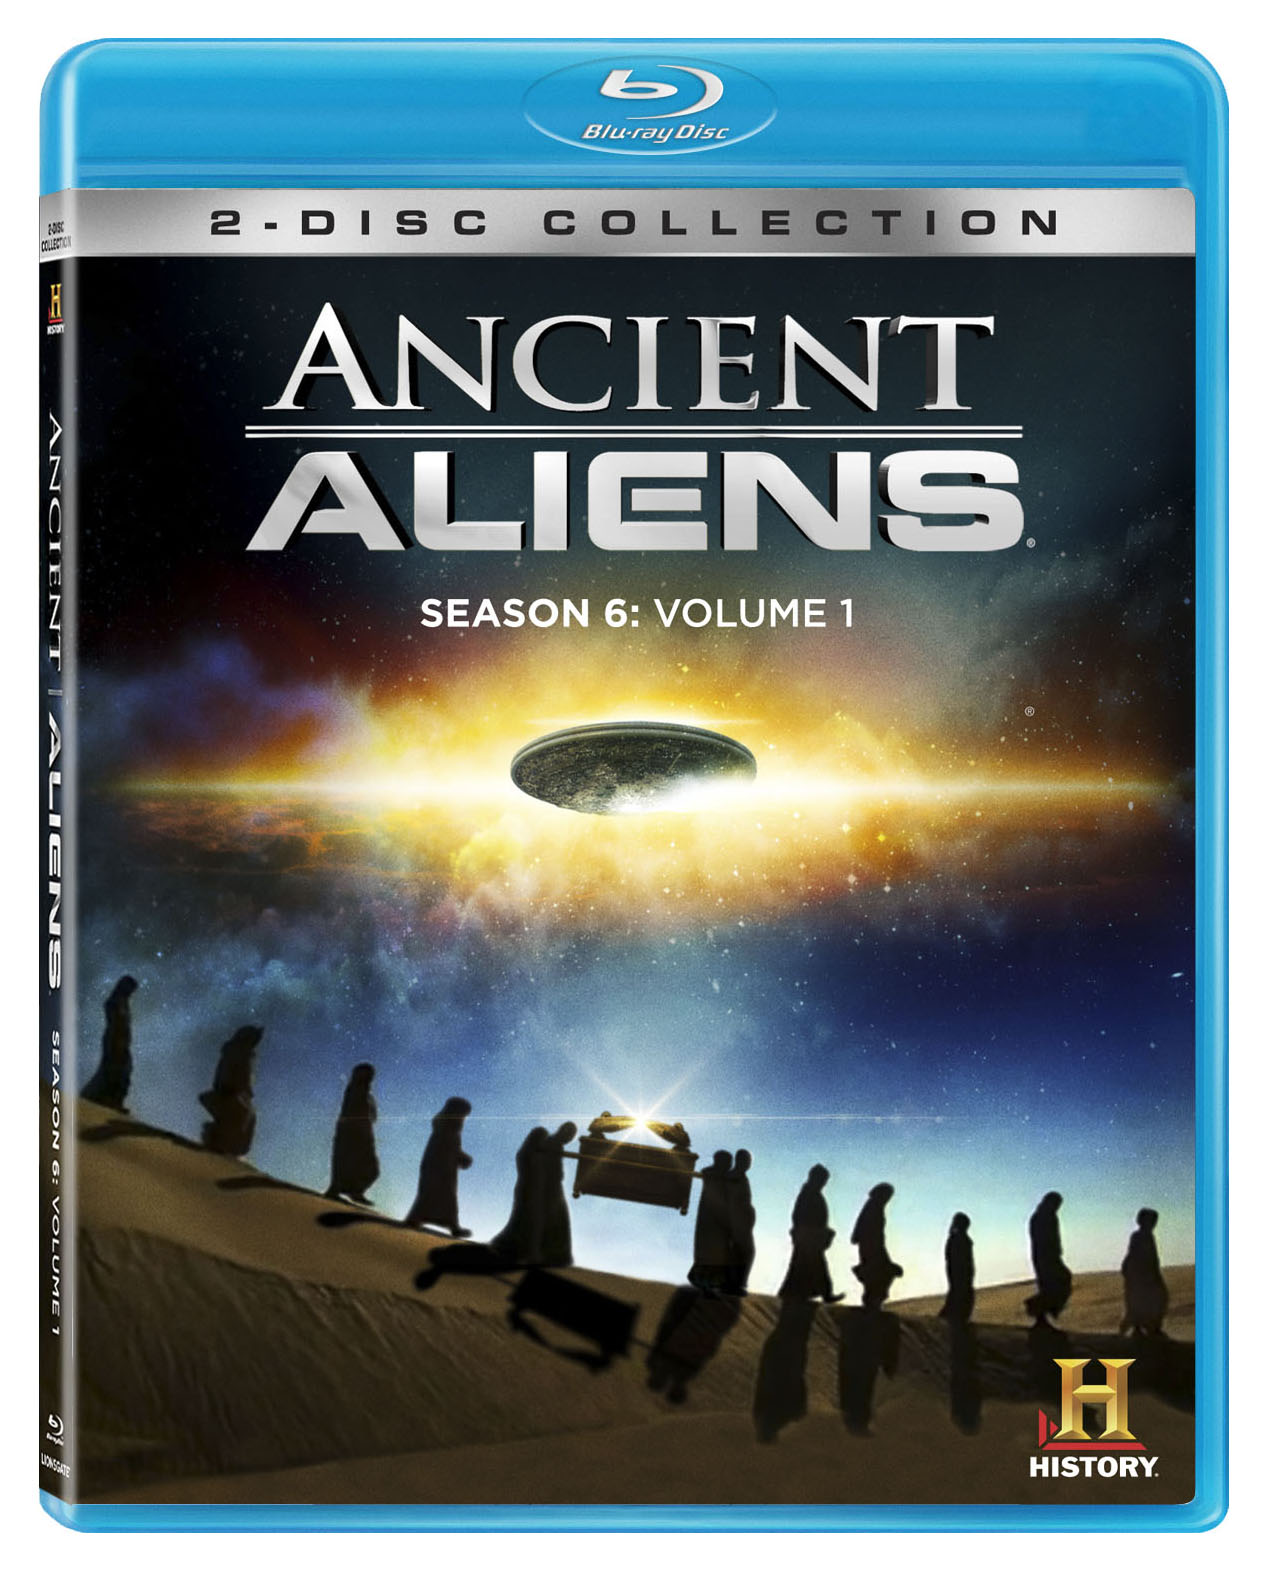 Ancient Aliens: Season 6